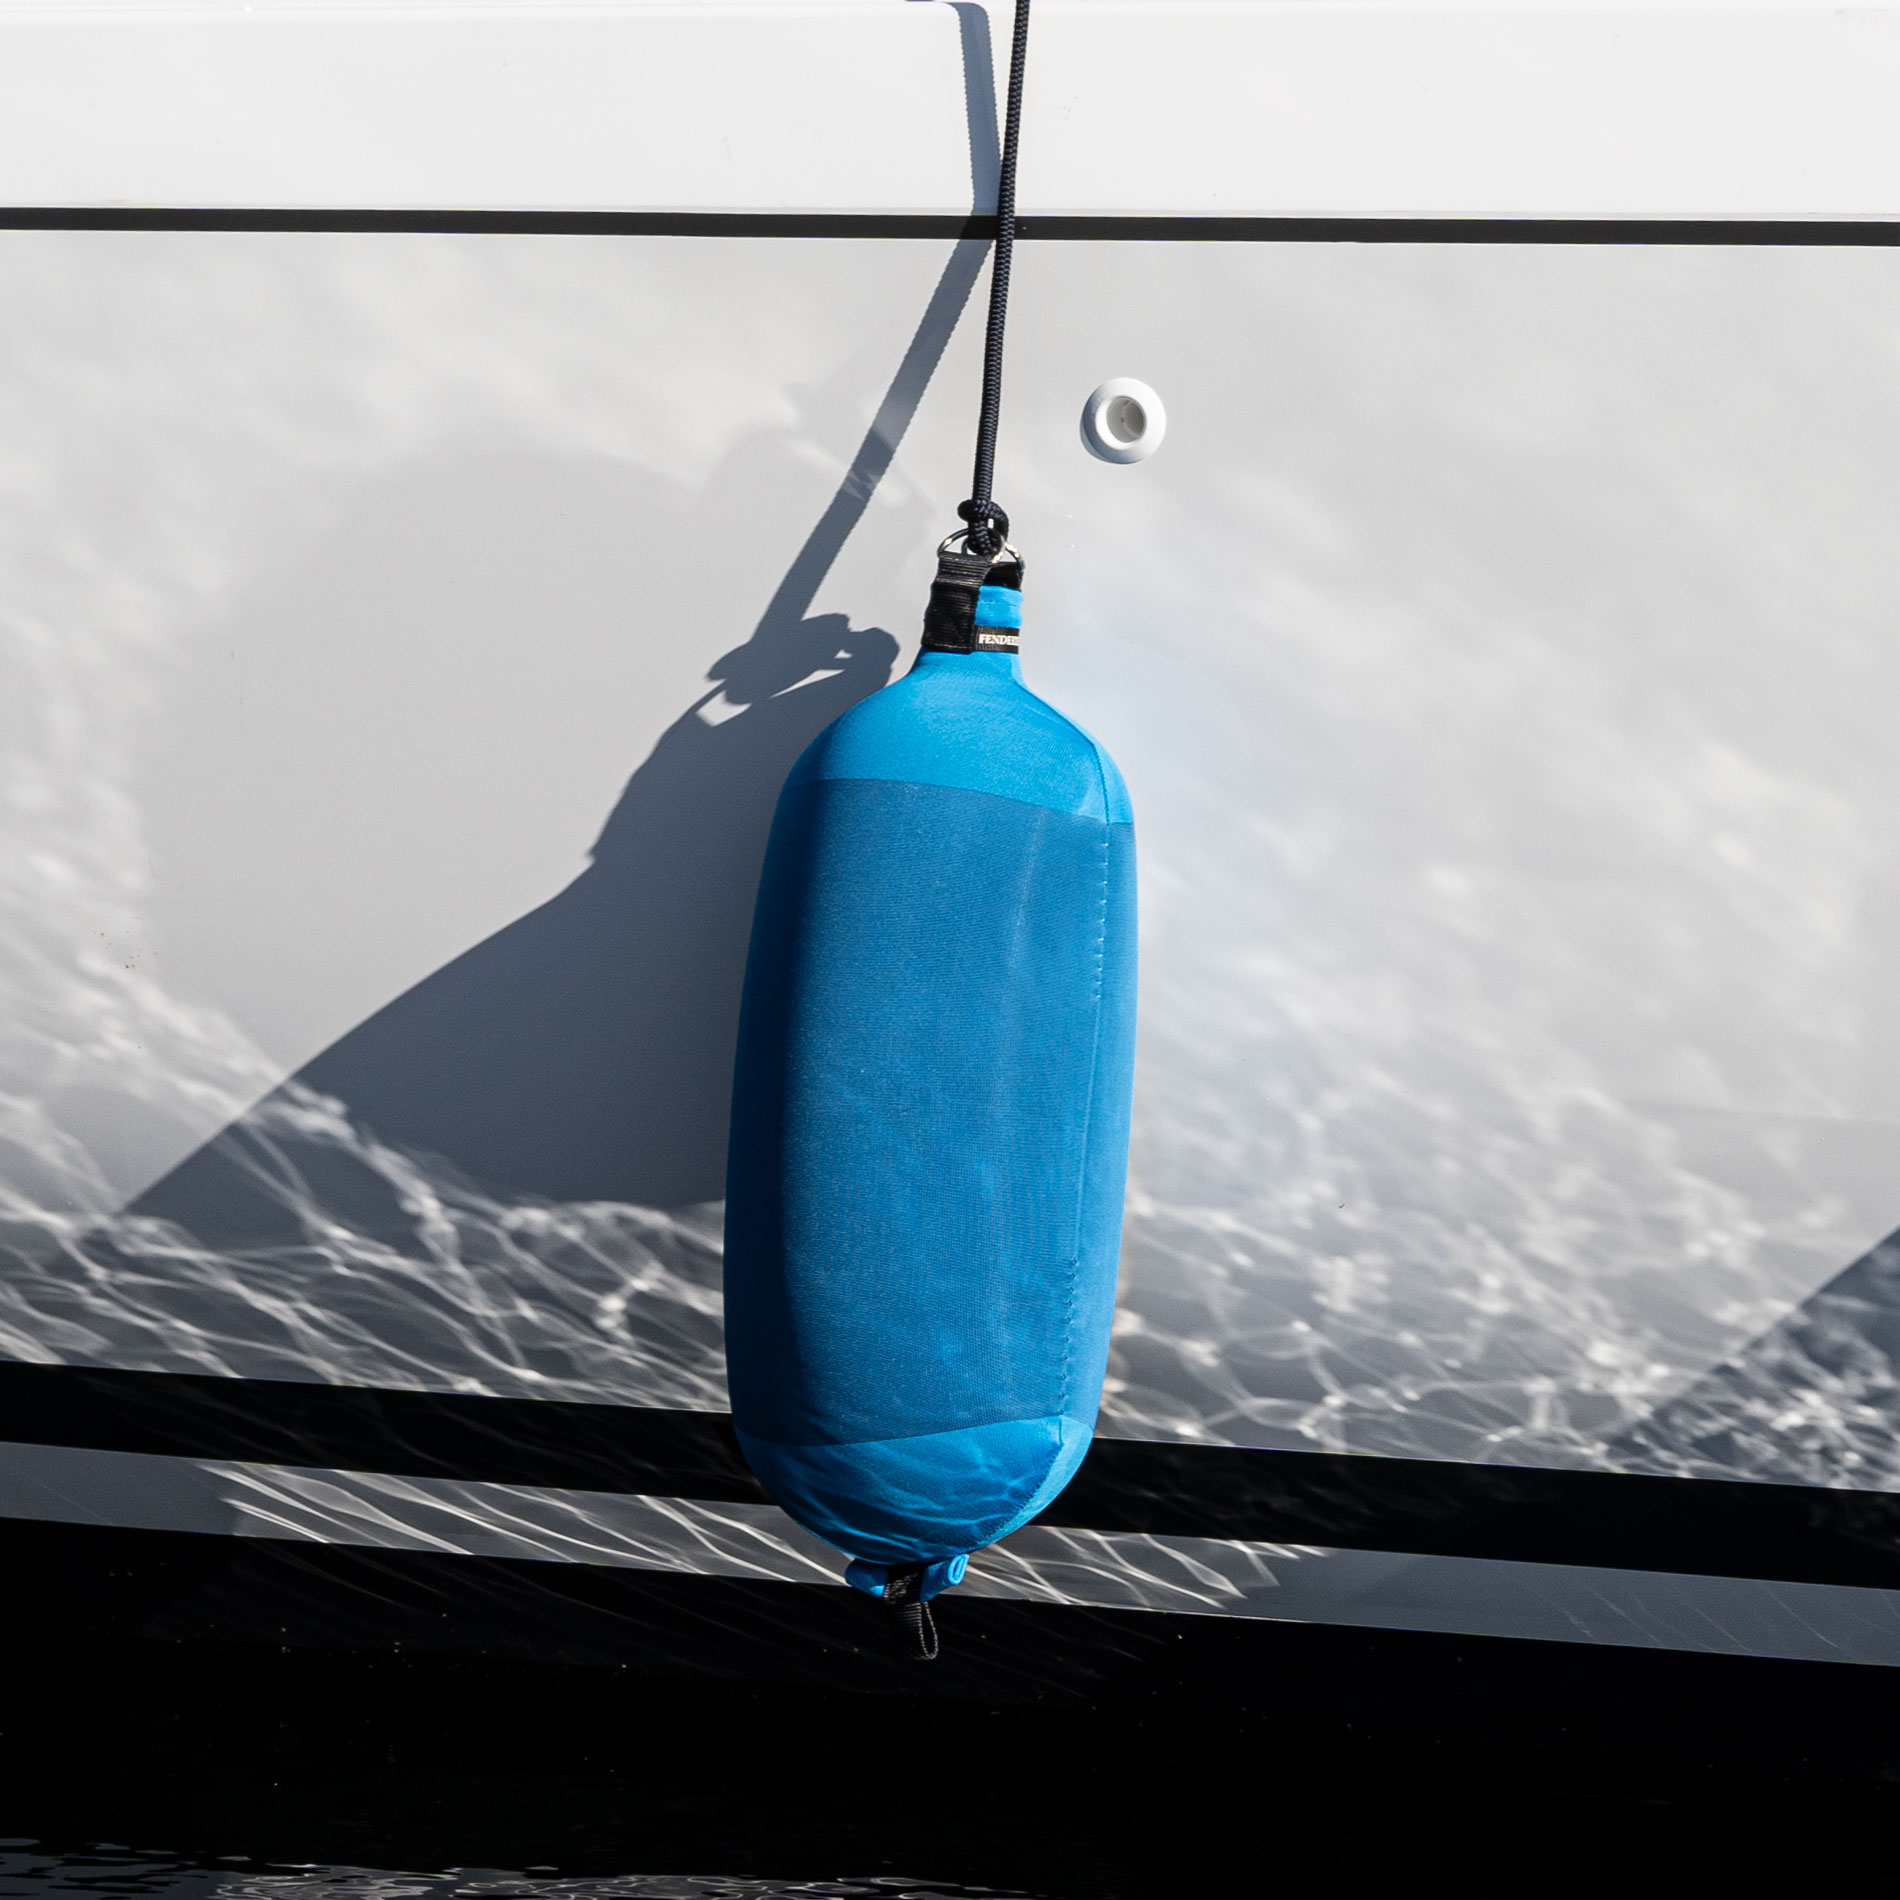 Royal Blue Fendertex cylindrical fender on sailboat